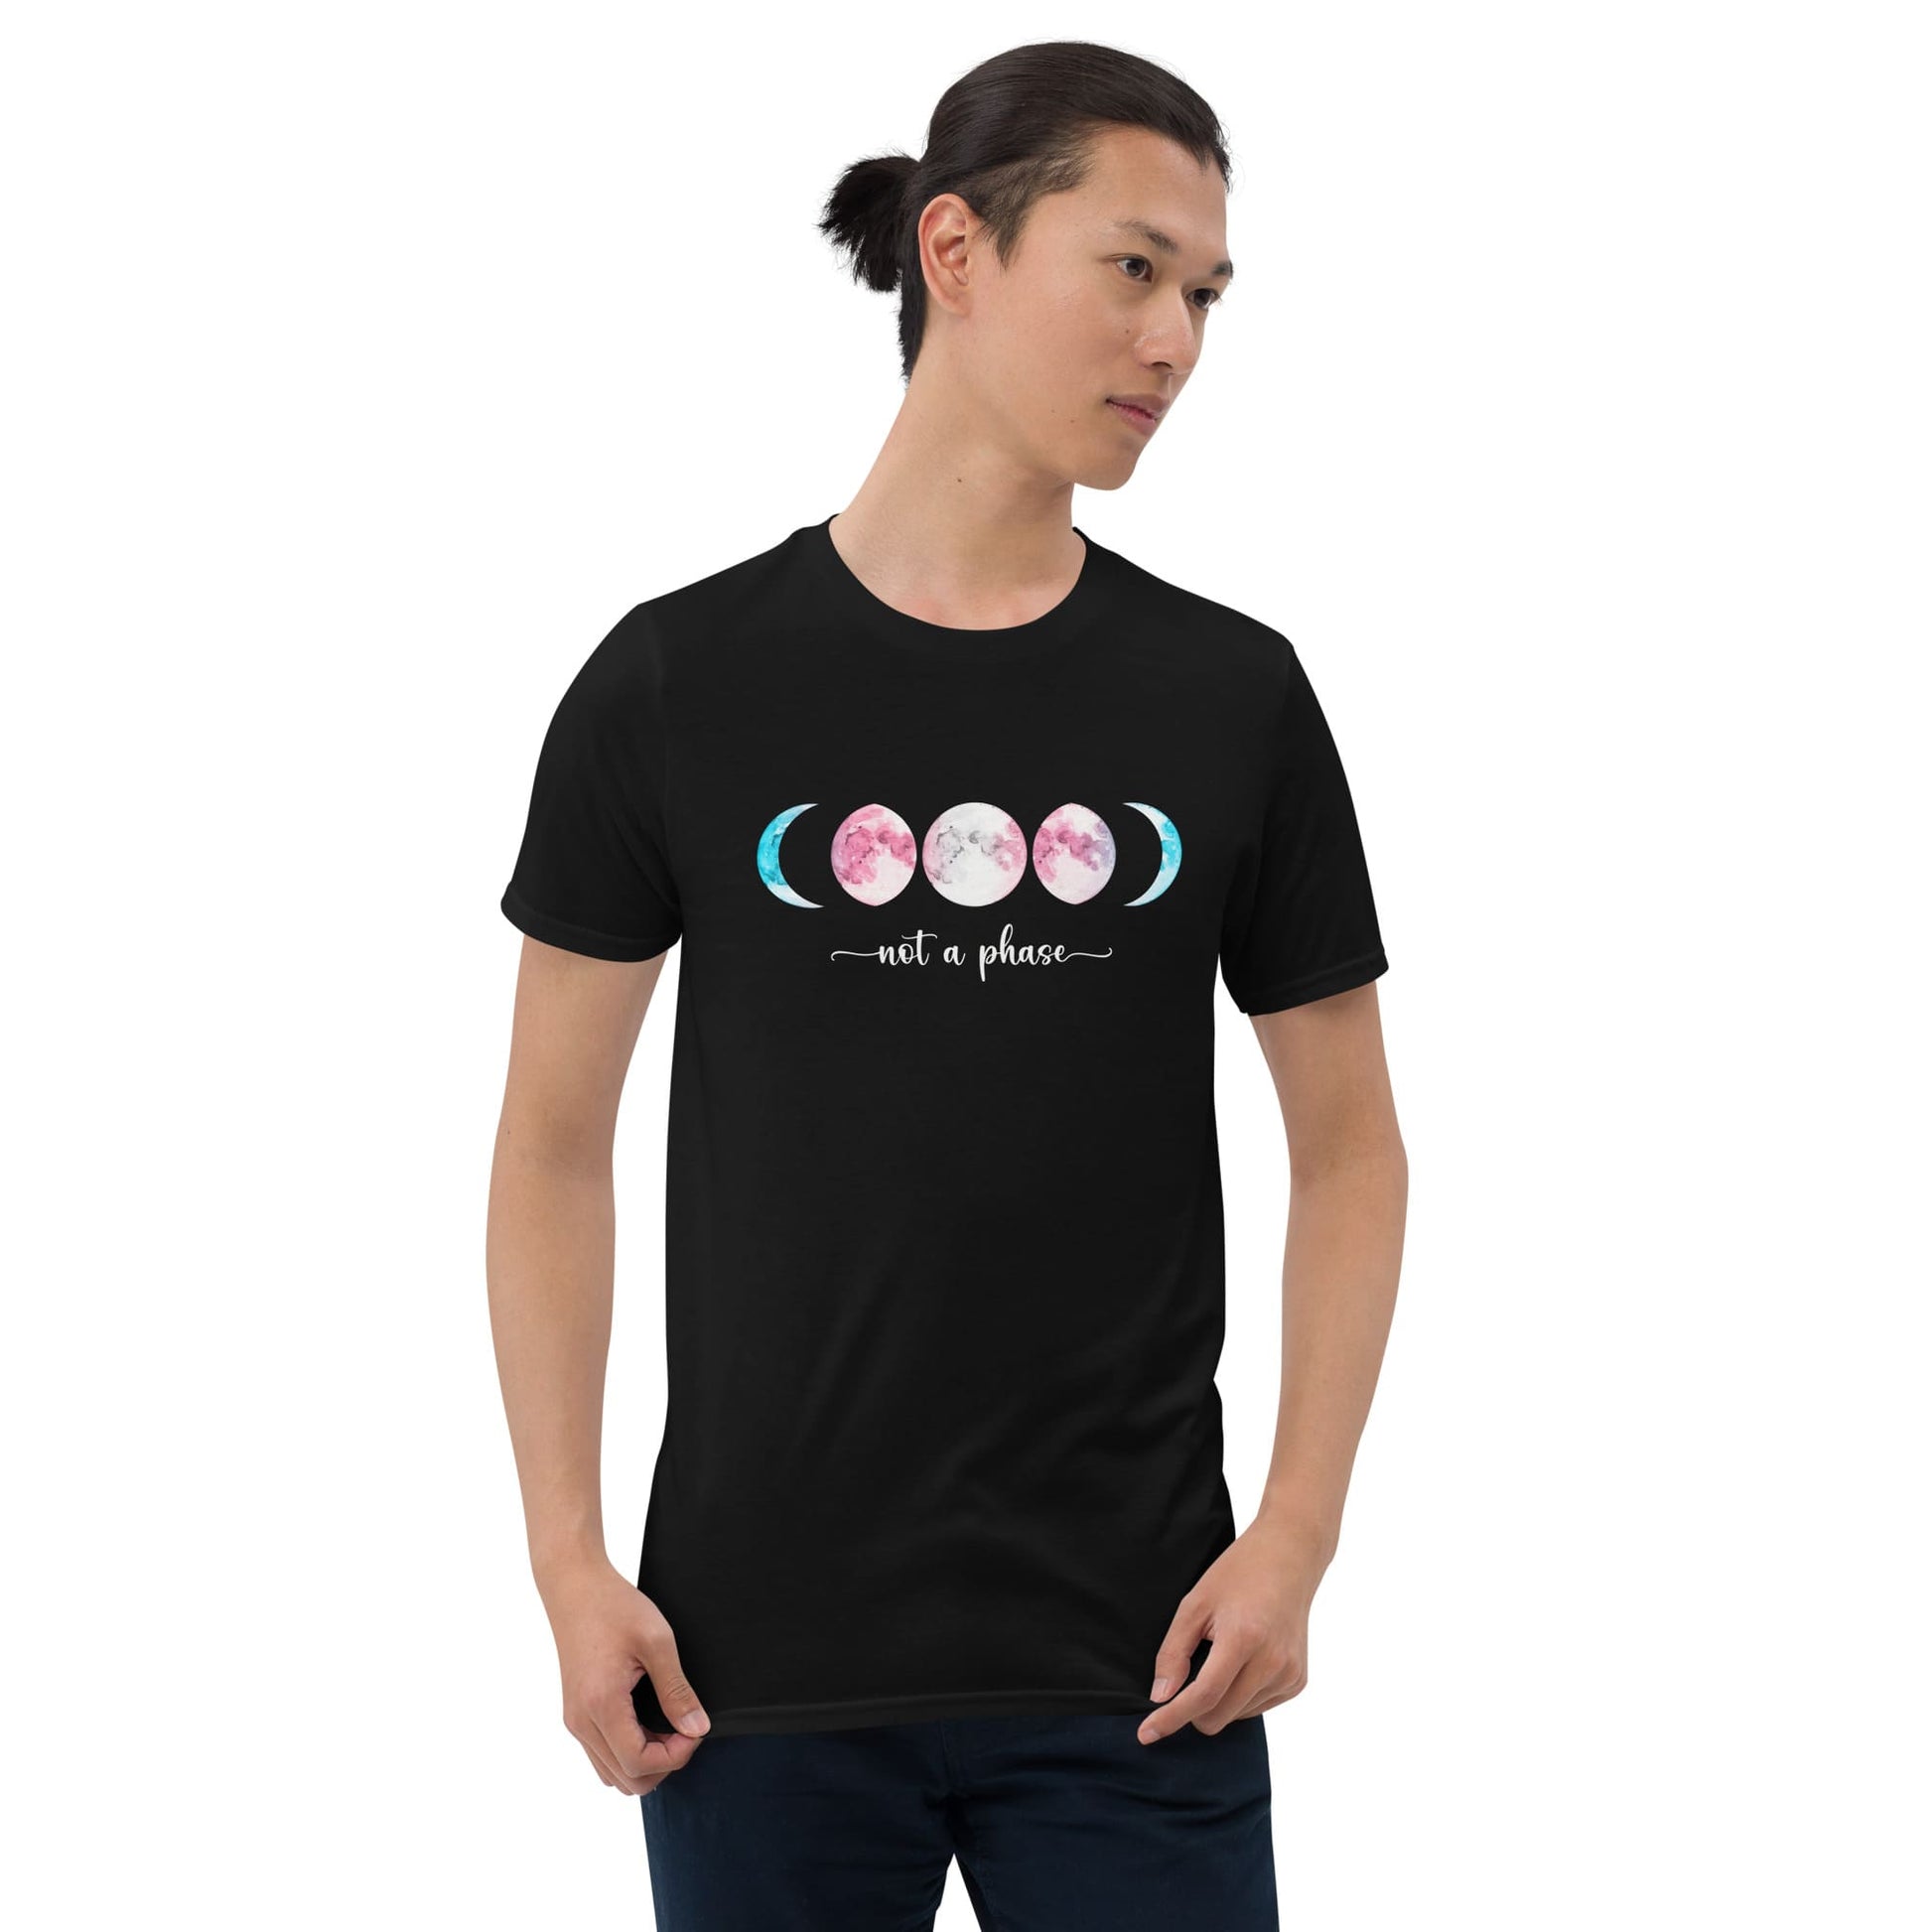 transgender shirt, not a phase moon phases, model 1